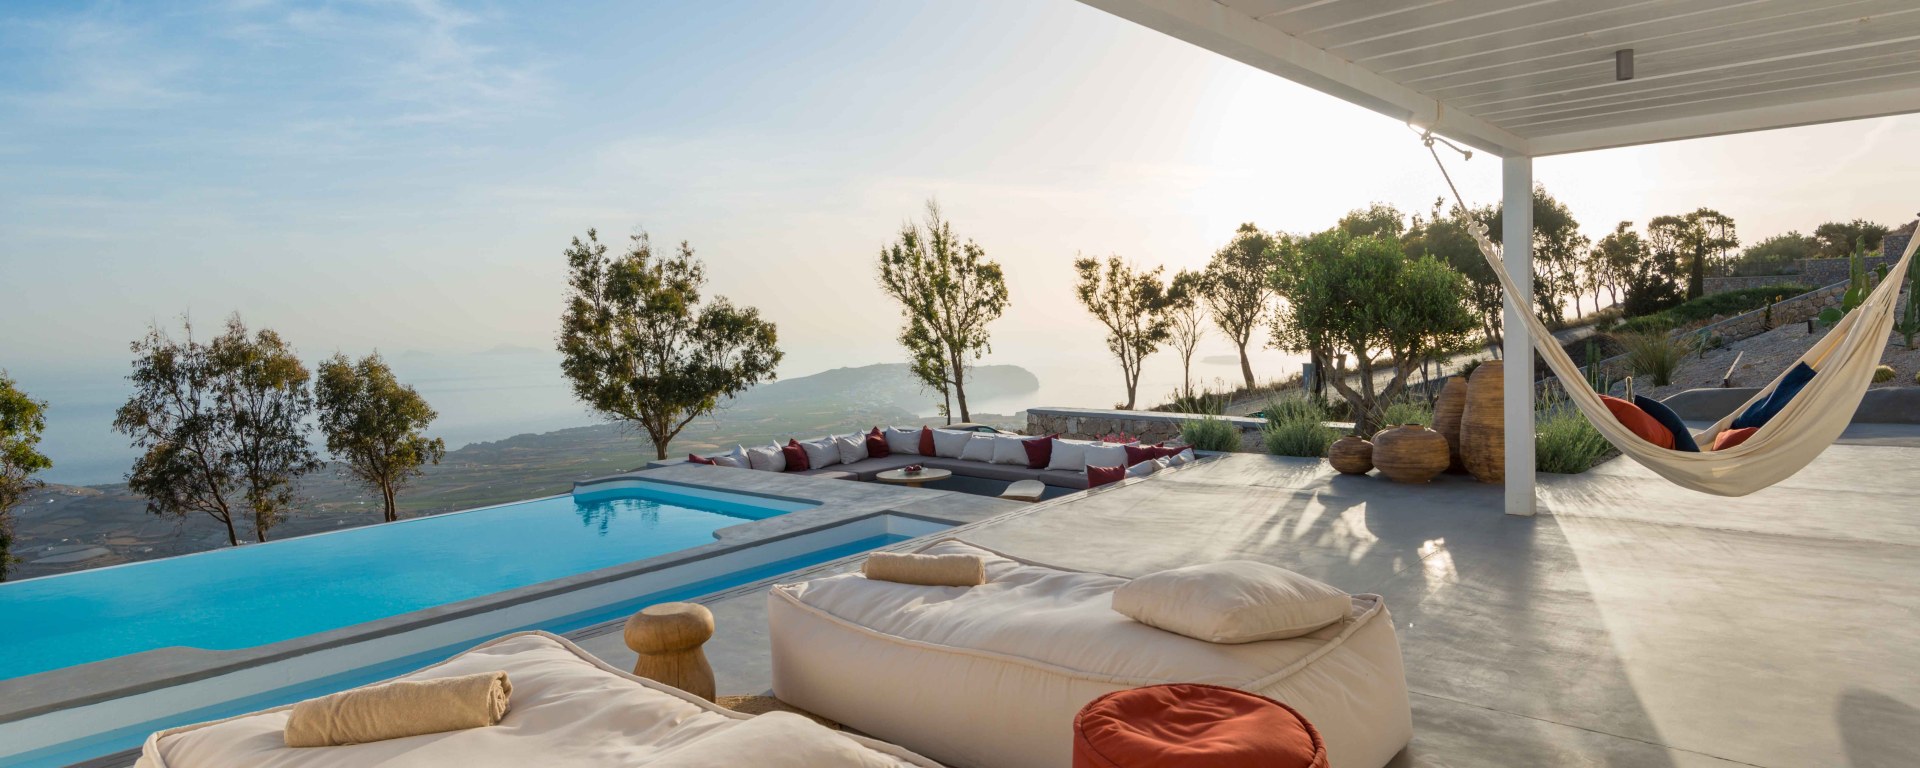 Luxus Ferienhaus Santorin Mieten - Villa Princess Retreat